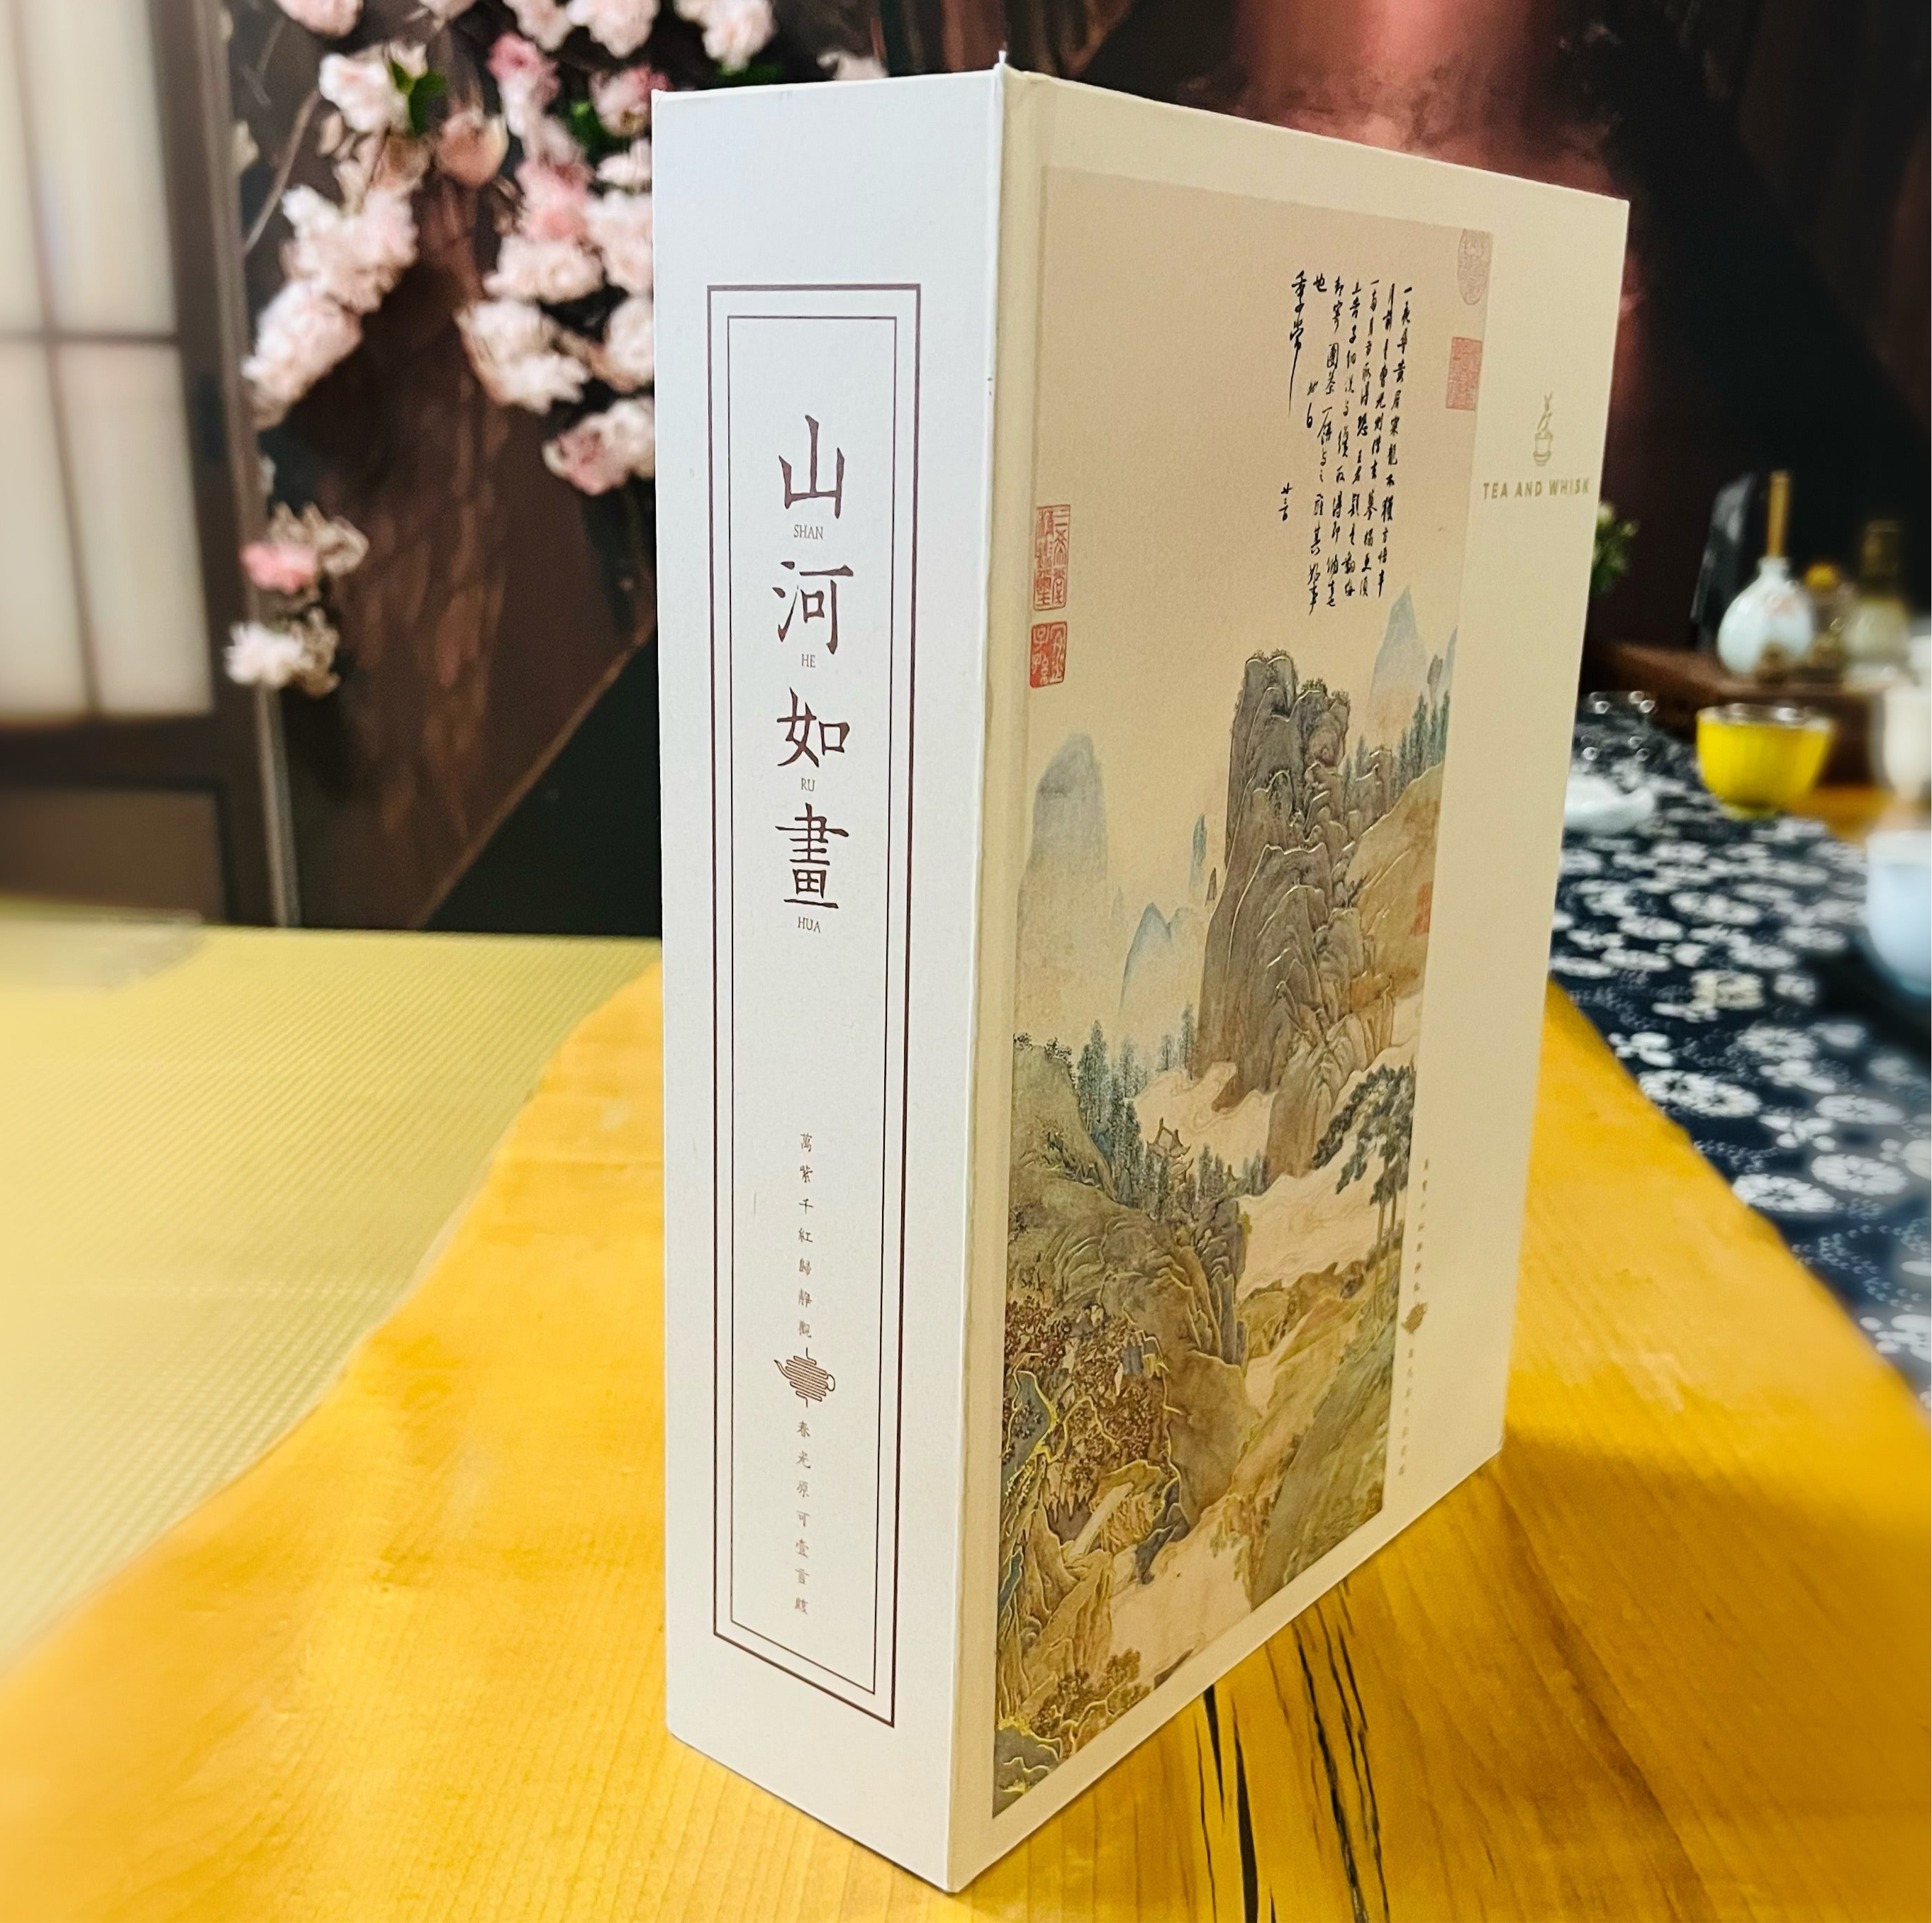 Decorative Book Gift Box with Featured Premium Tea